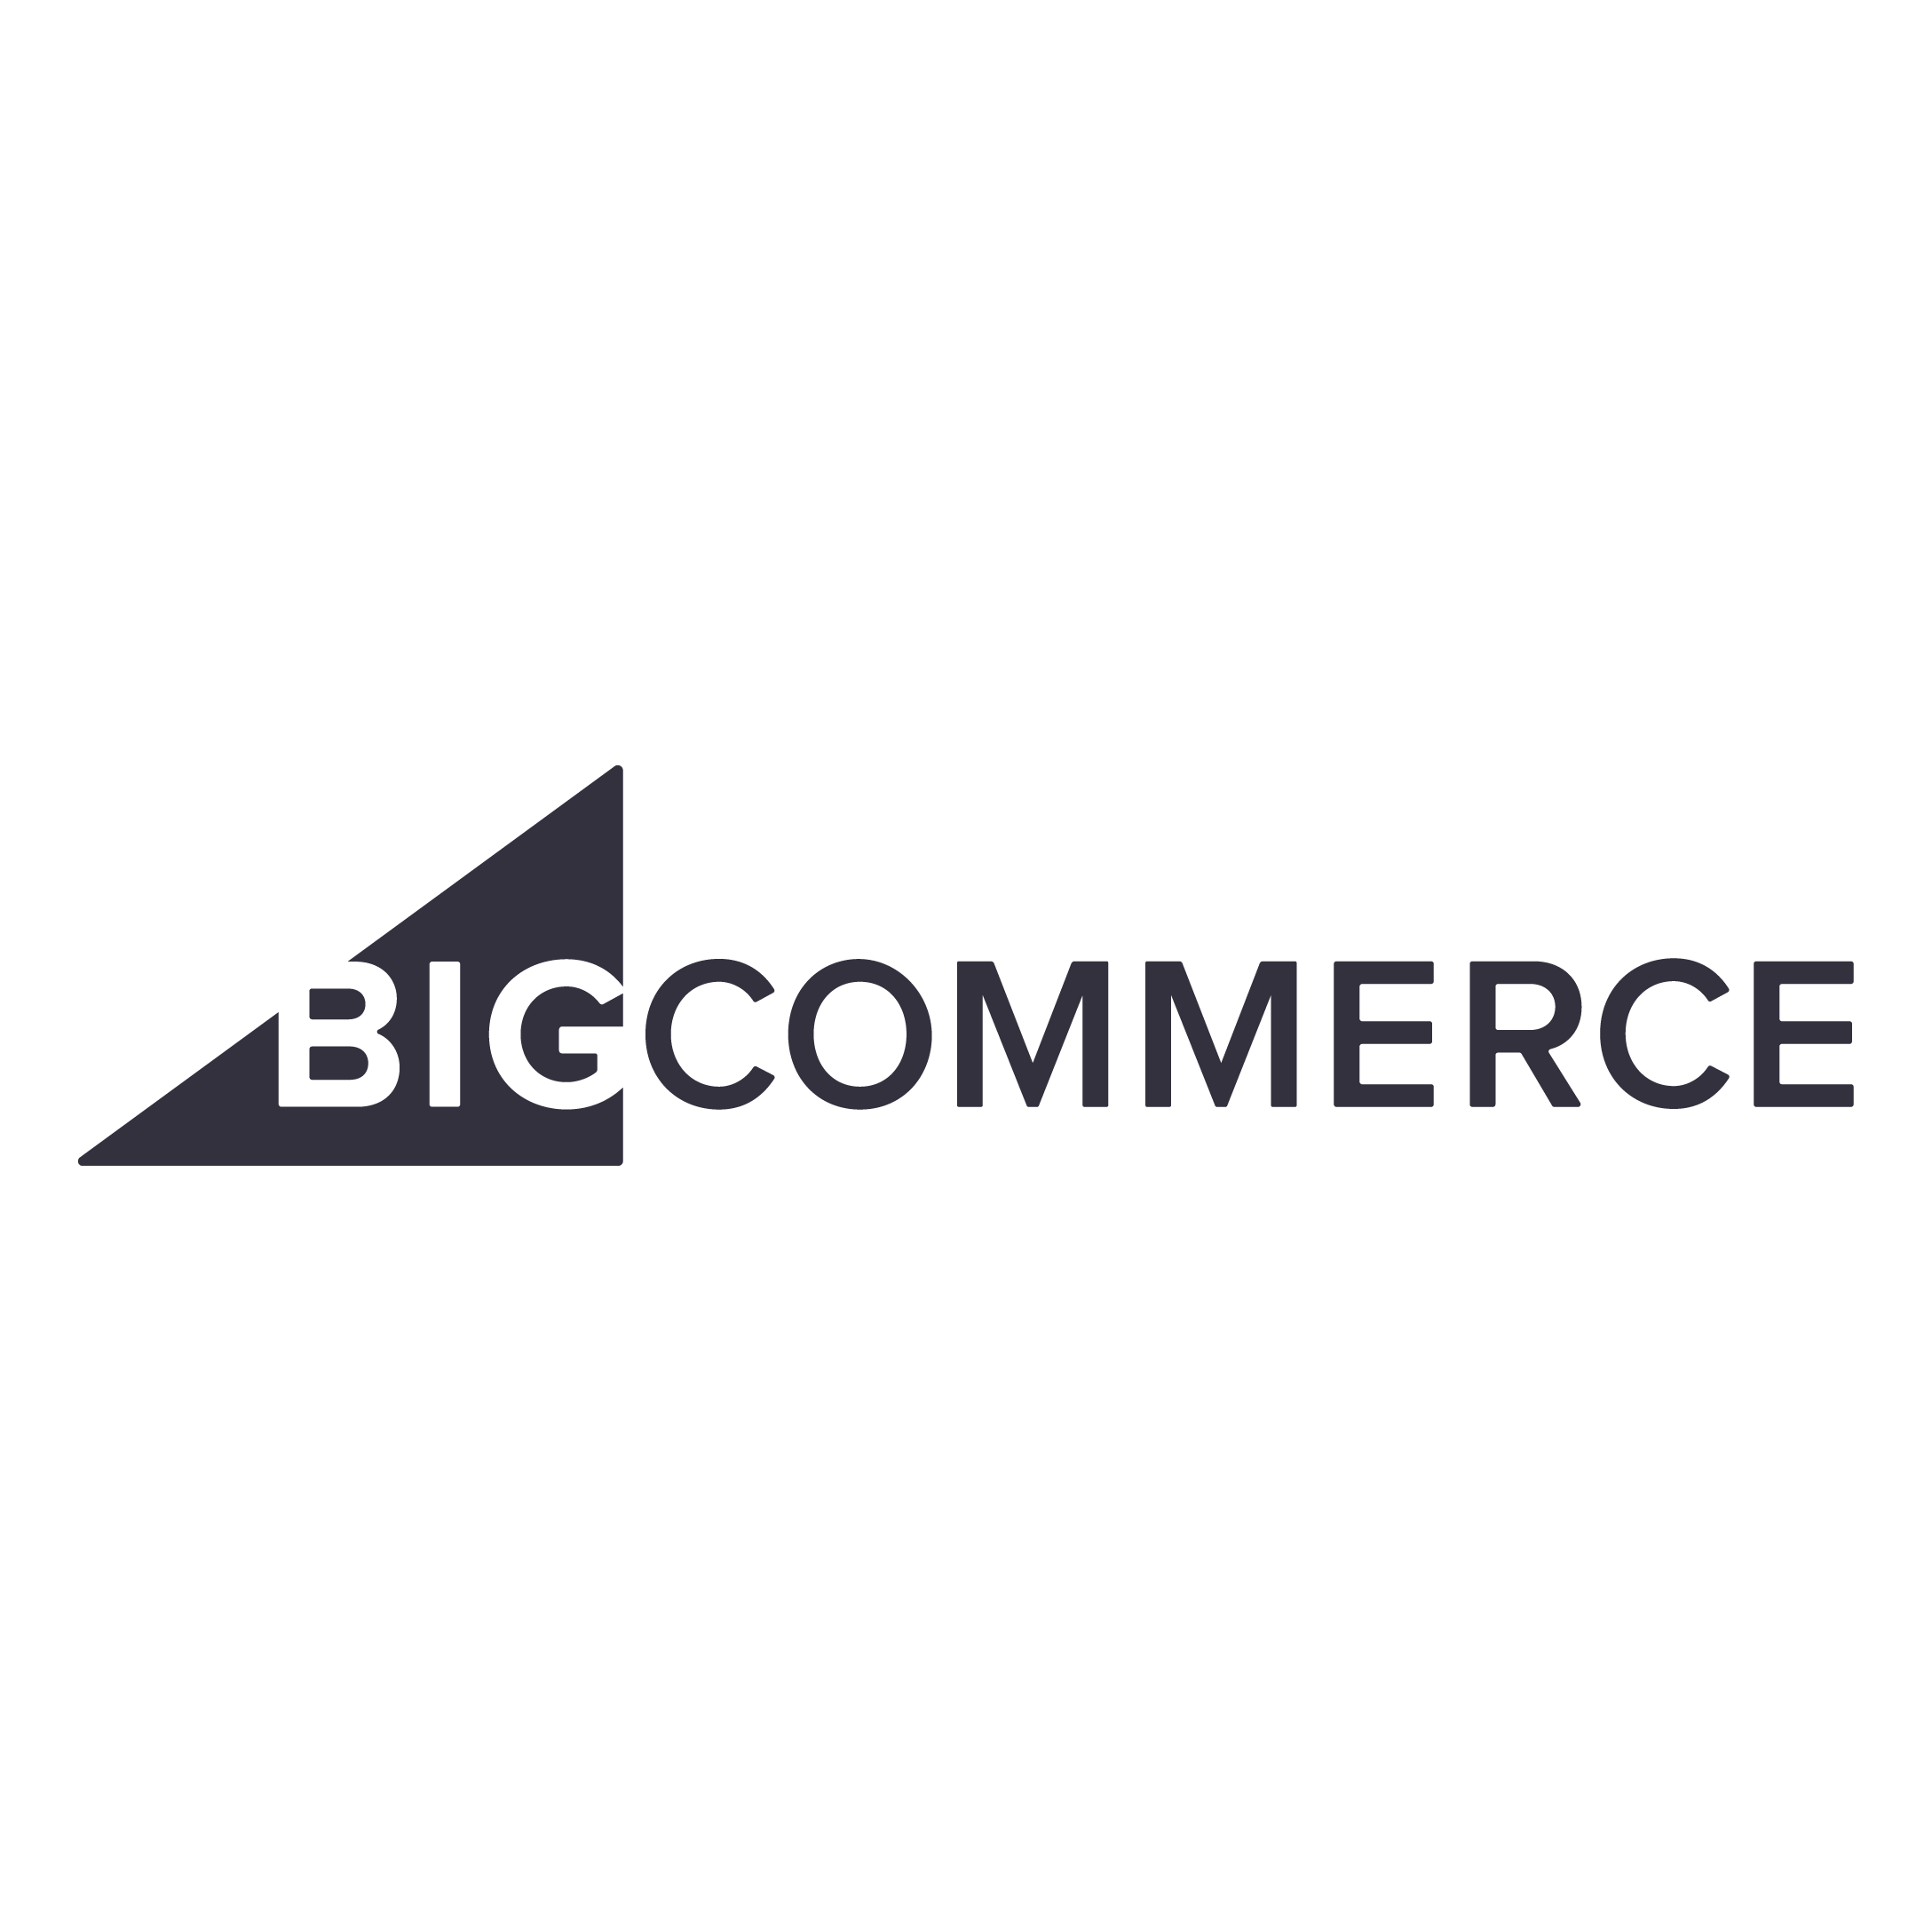 BigCommerce Stock